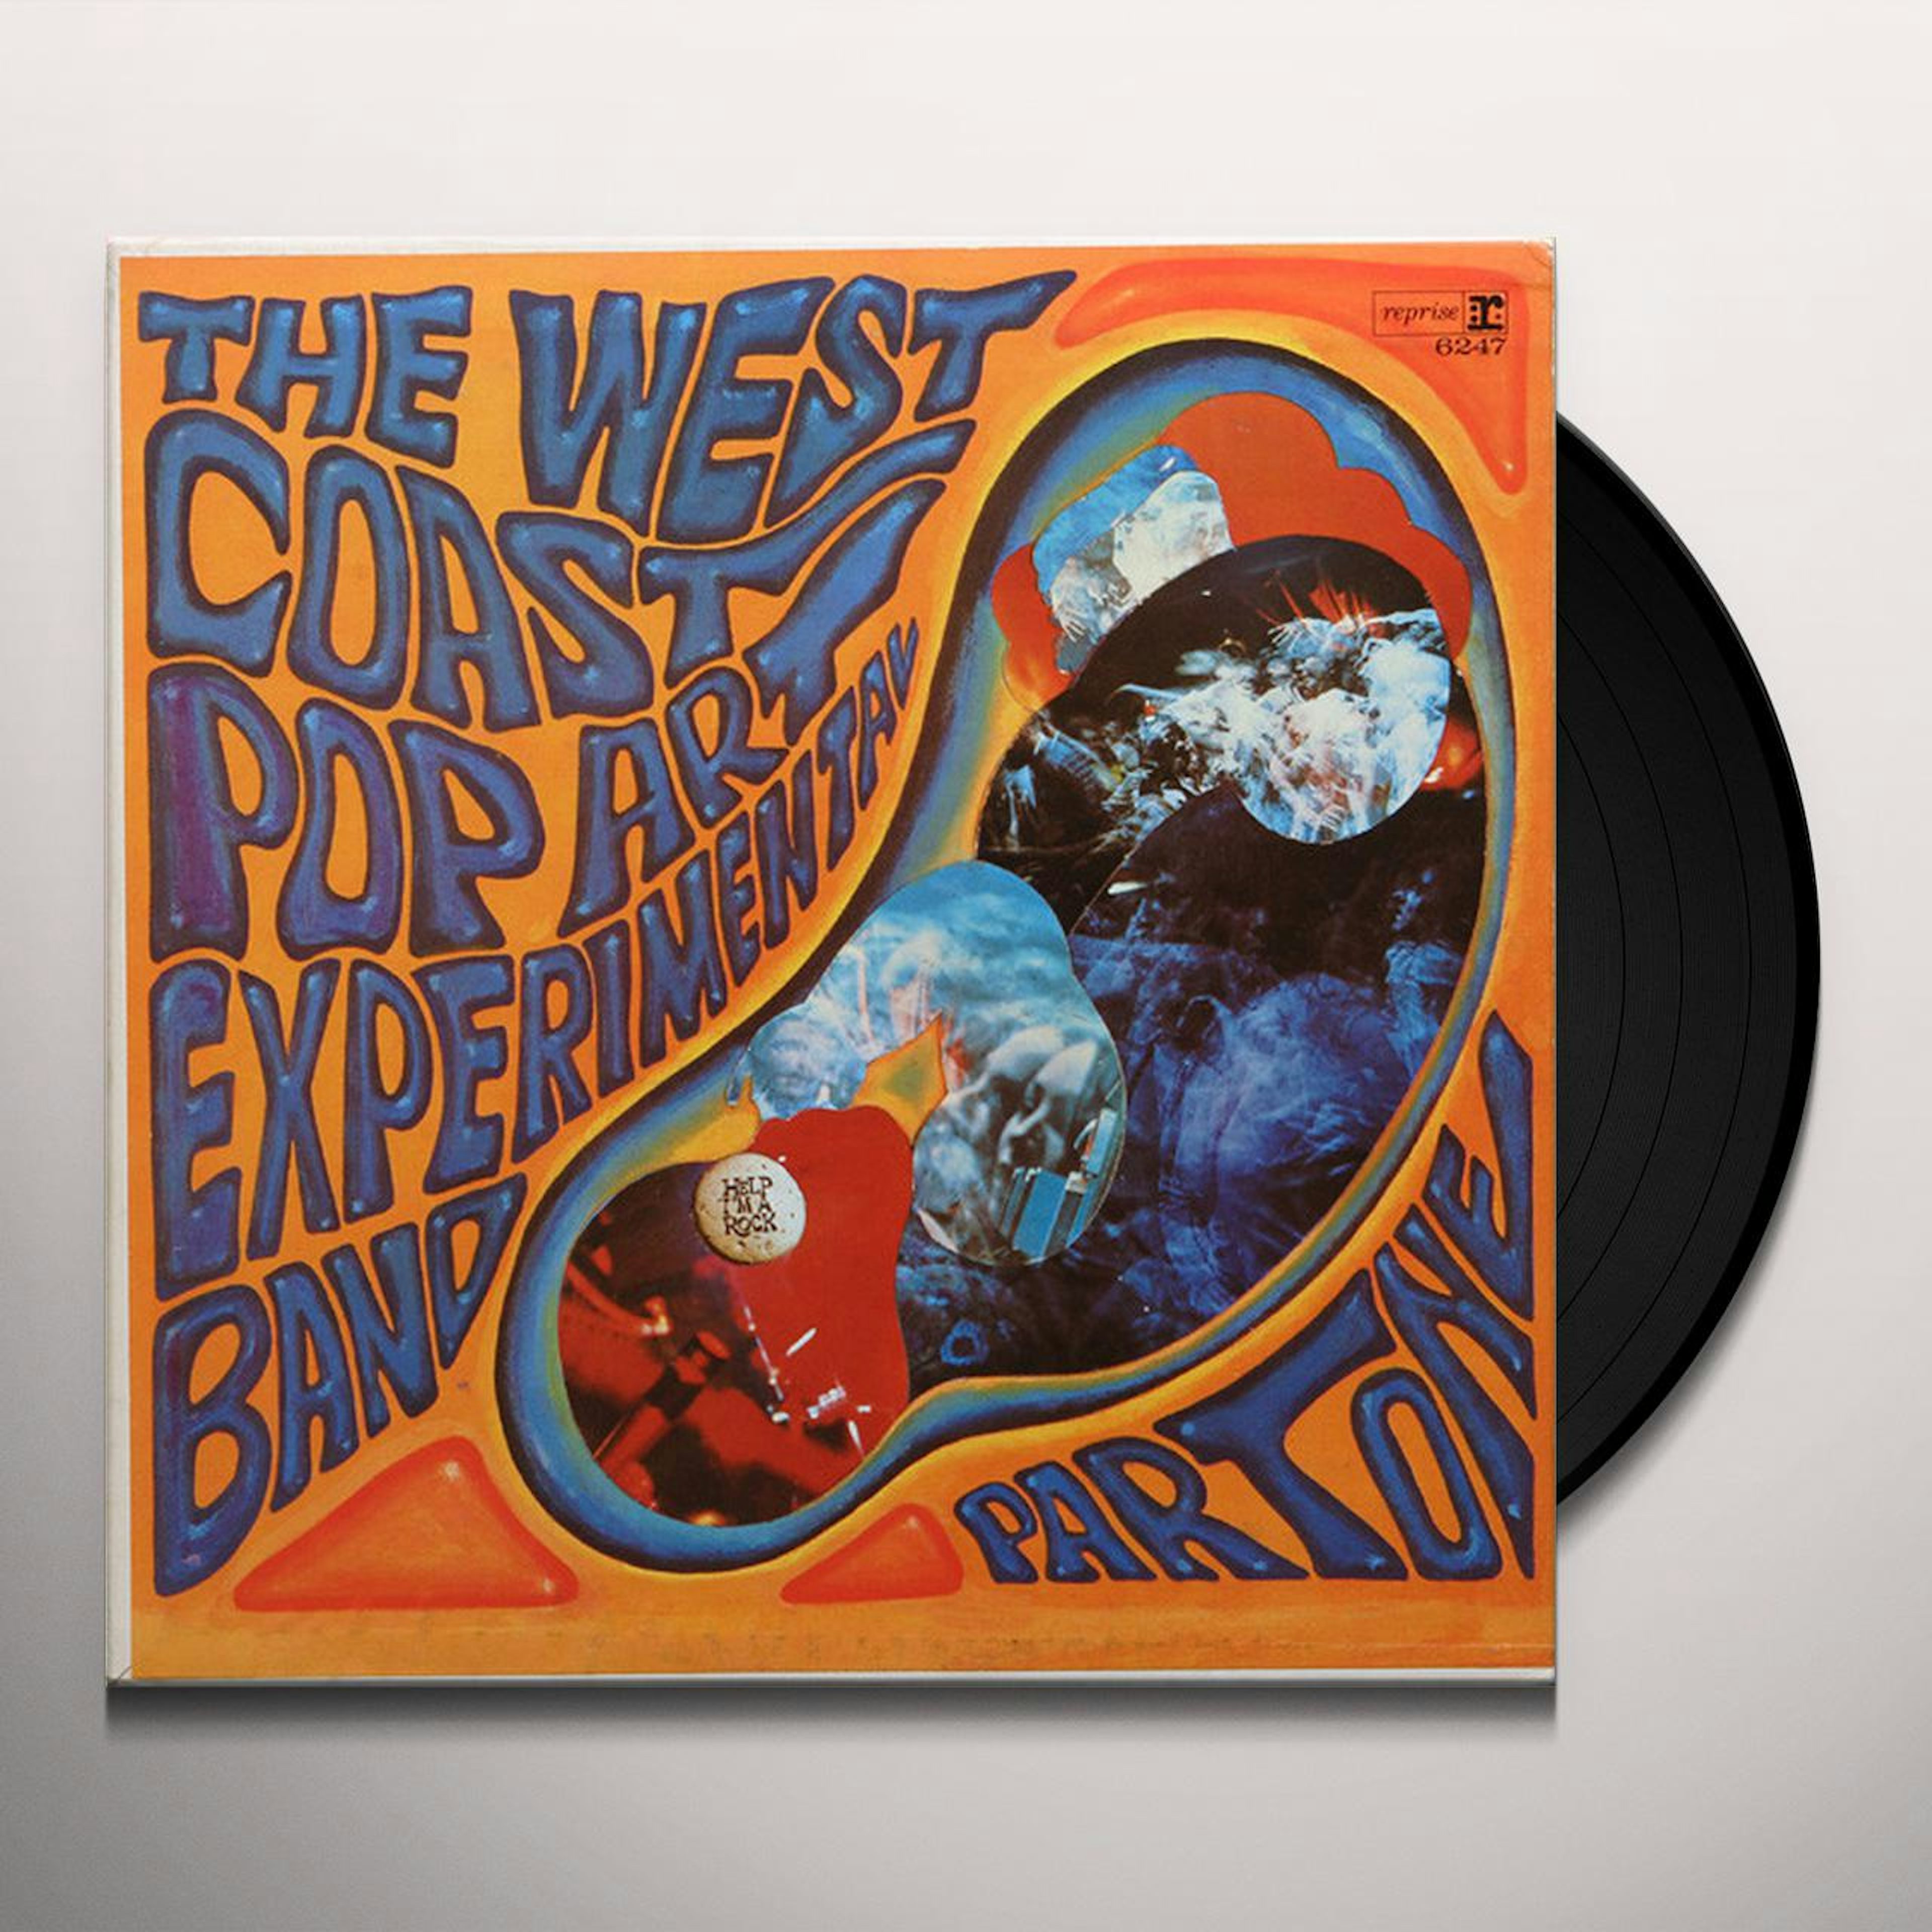 Oorlogsschip Kwaadaardige tumor Opschudding The West Coast Pop Art Experimental Band Part One Vinyl Record